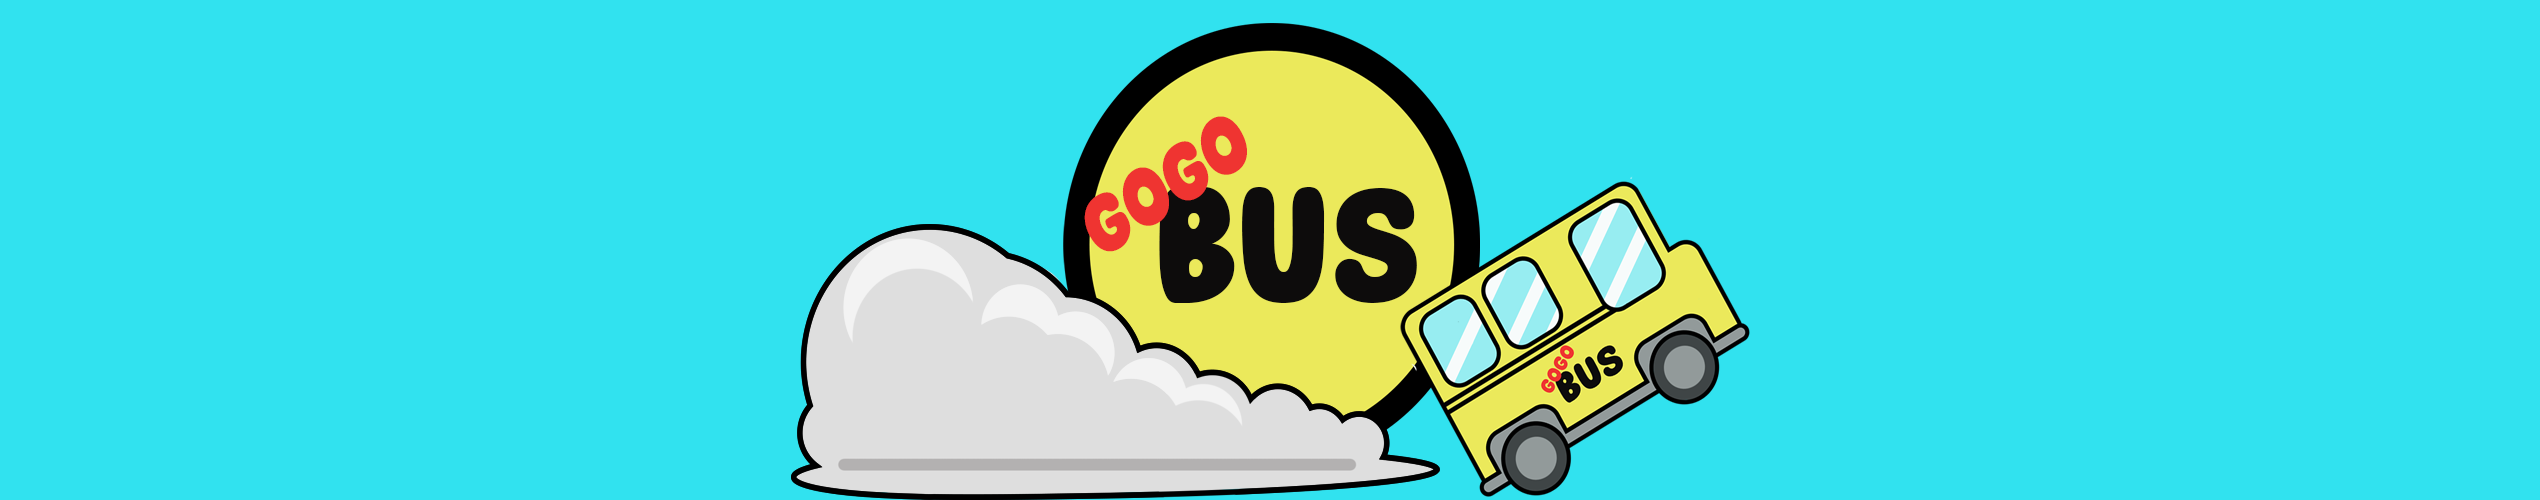 GoGo Bus